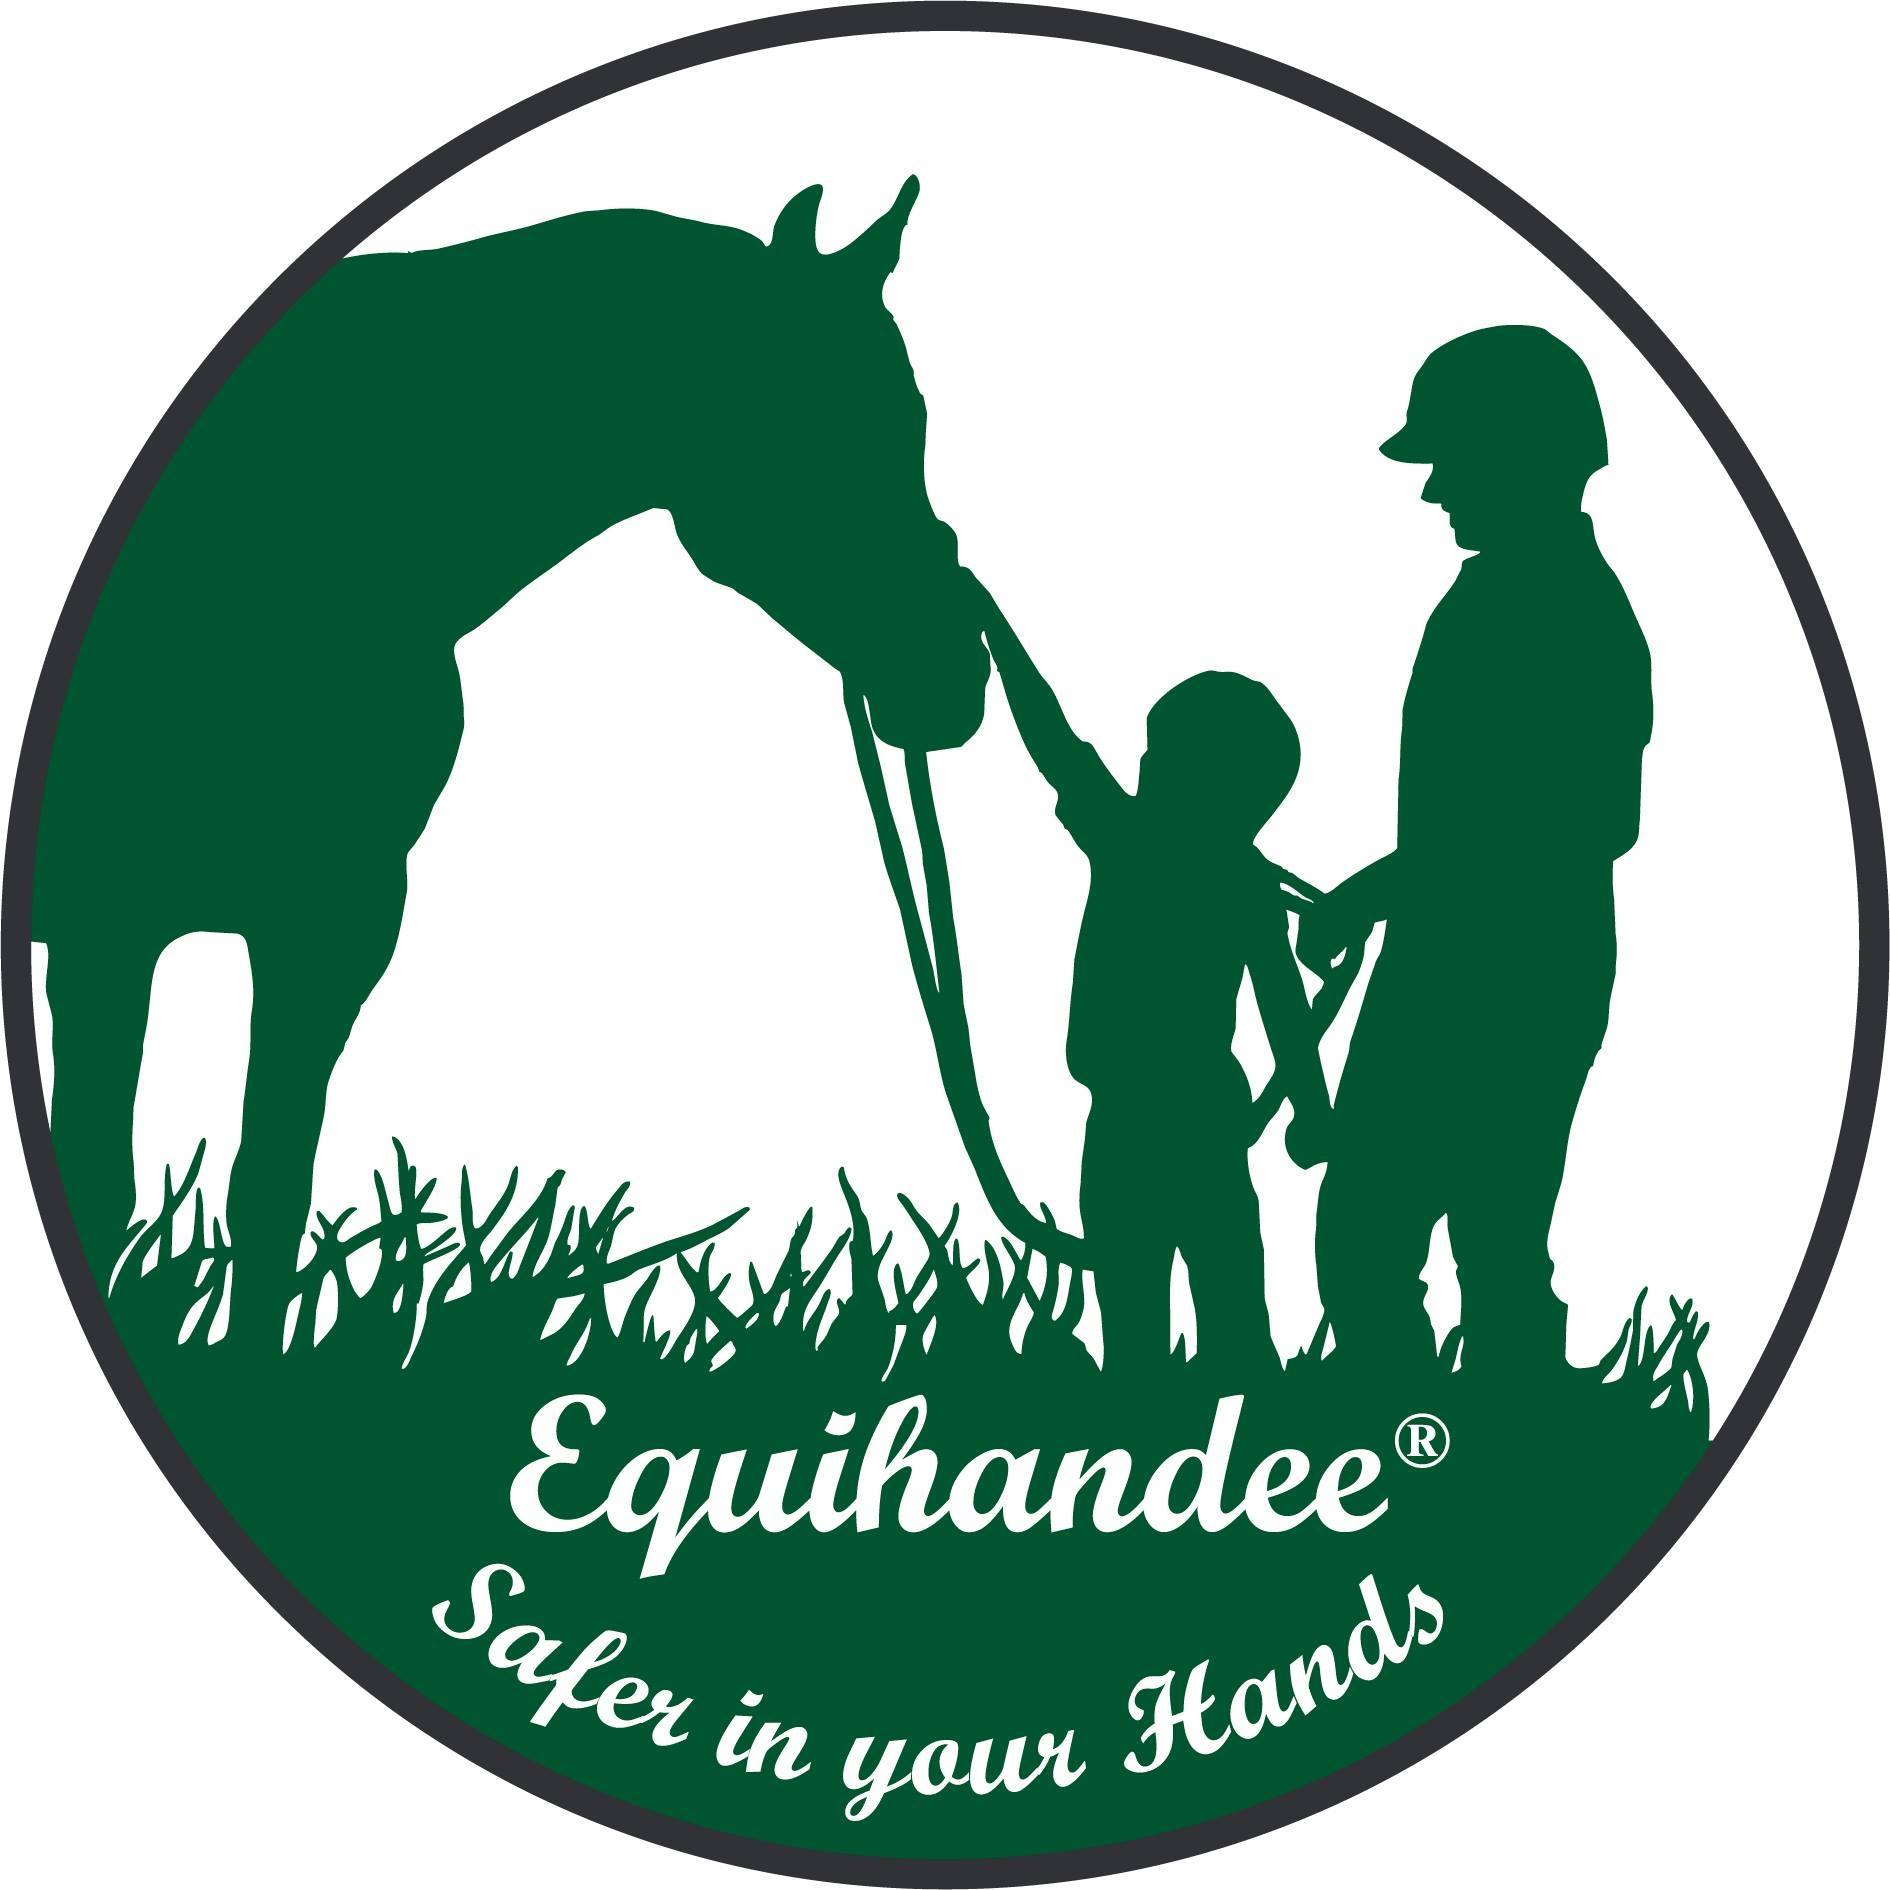 Equihandee logo.jpg